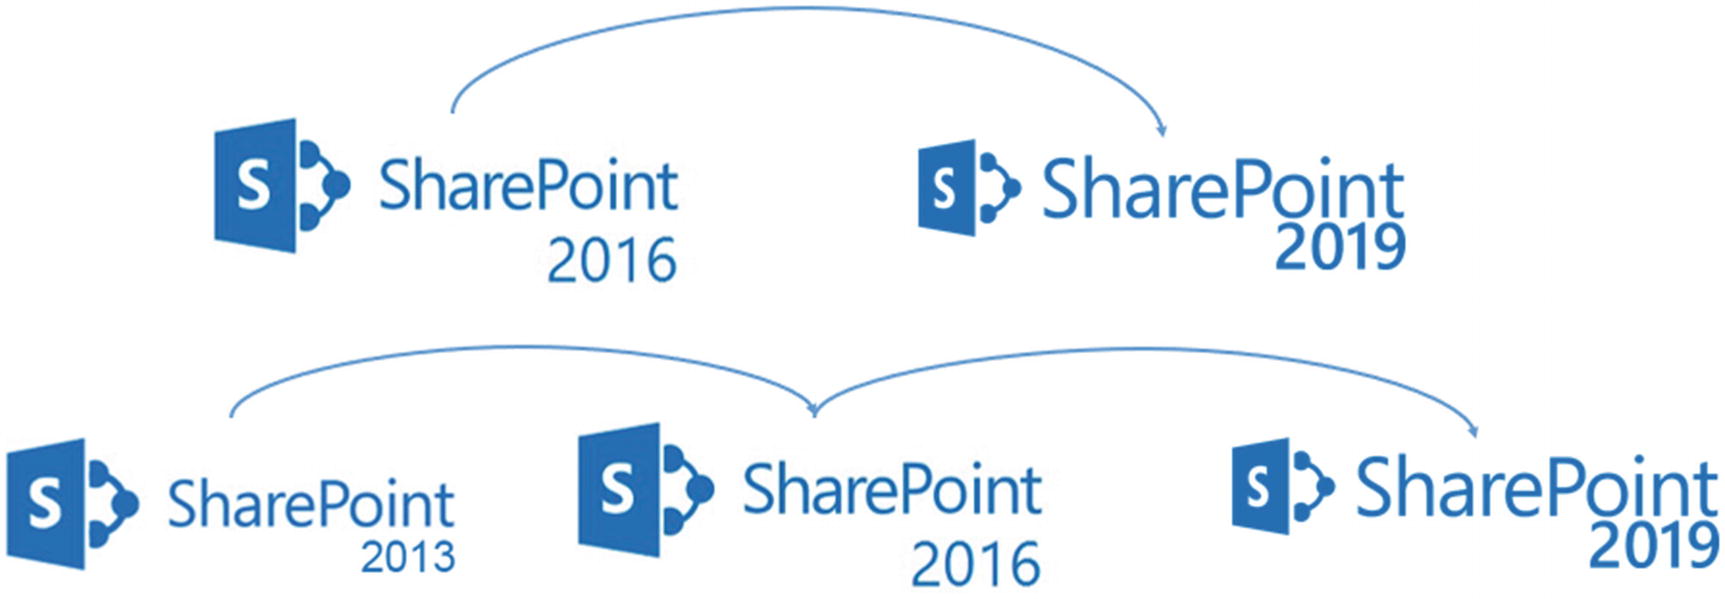 Upgrade blocked sharepoint 2013 version